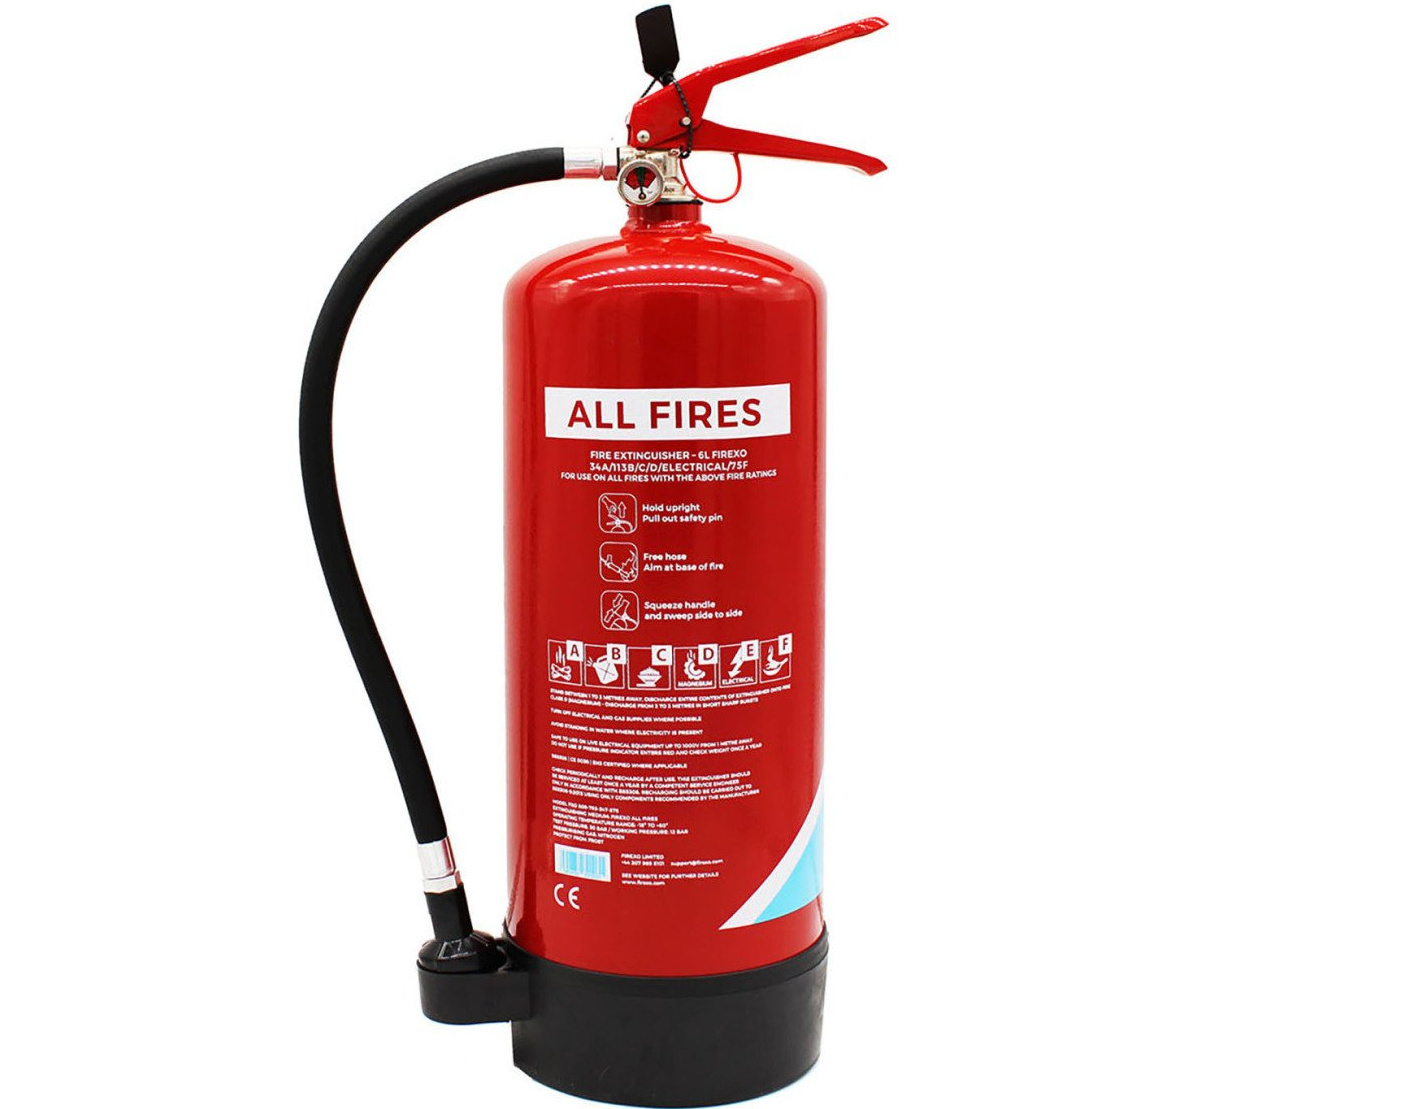 Firexo Fire extinguisher BS 5306